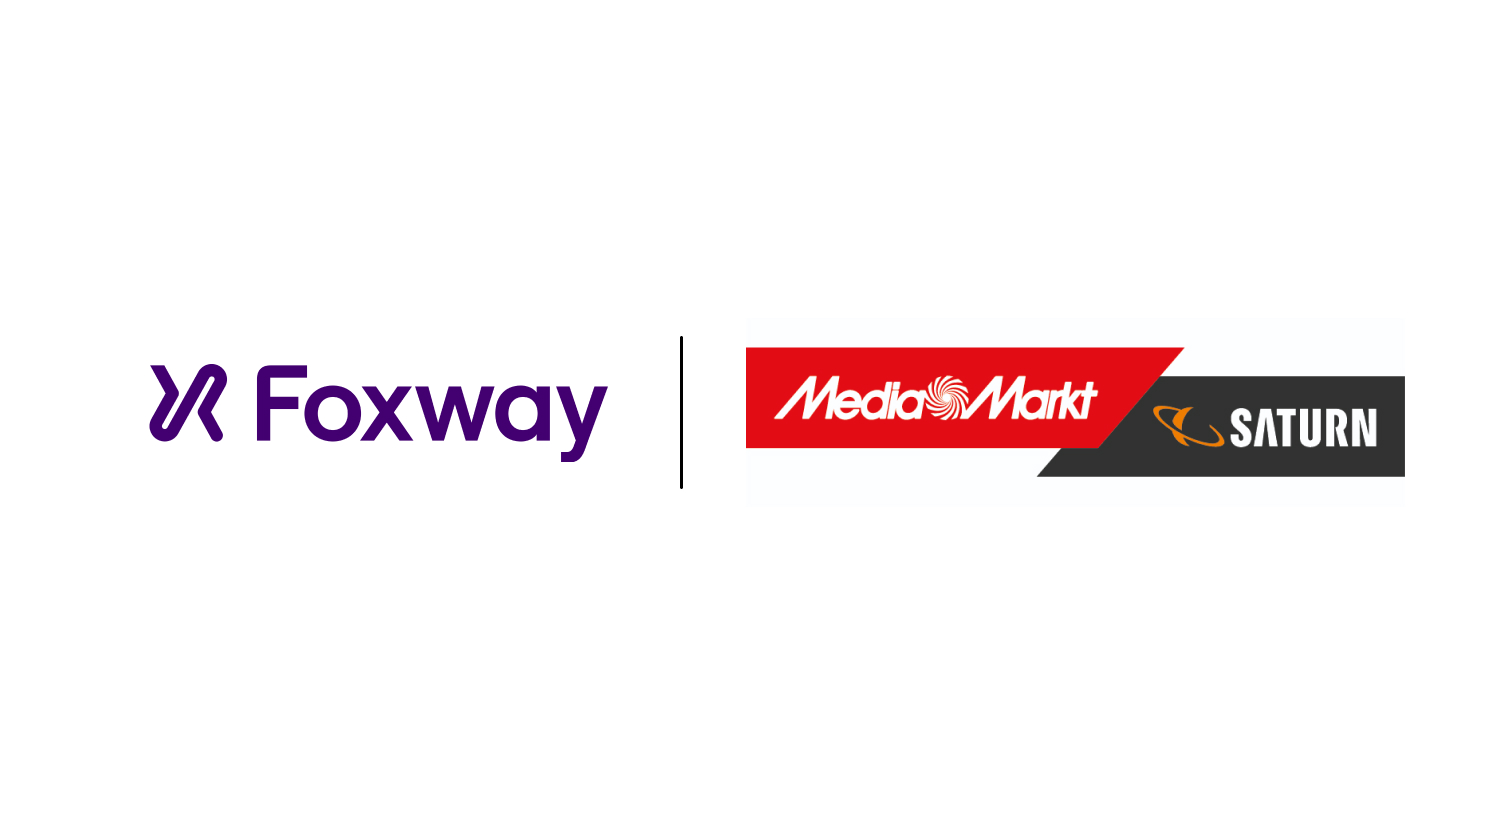 MediaMarktSaturn and Foxway form a comprehensive Re-Commerce